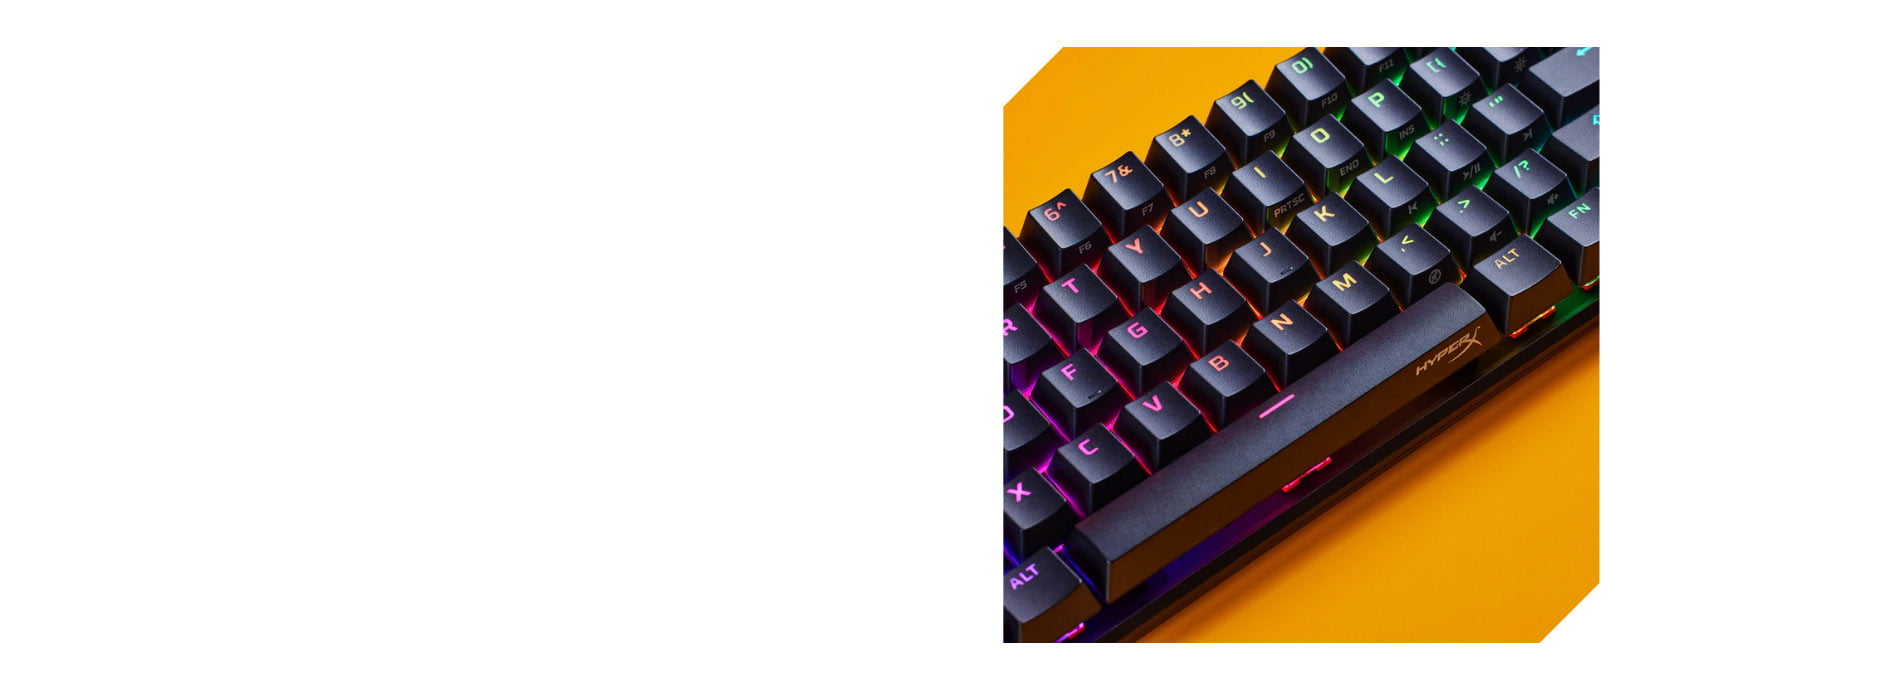 HyperX Alloy Origins 65 - Mechanical Gaming Keyboard - HX Red (US Layout) [ HKBO1T-RD-US/N ]